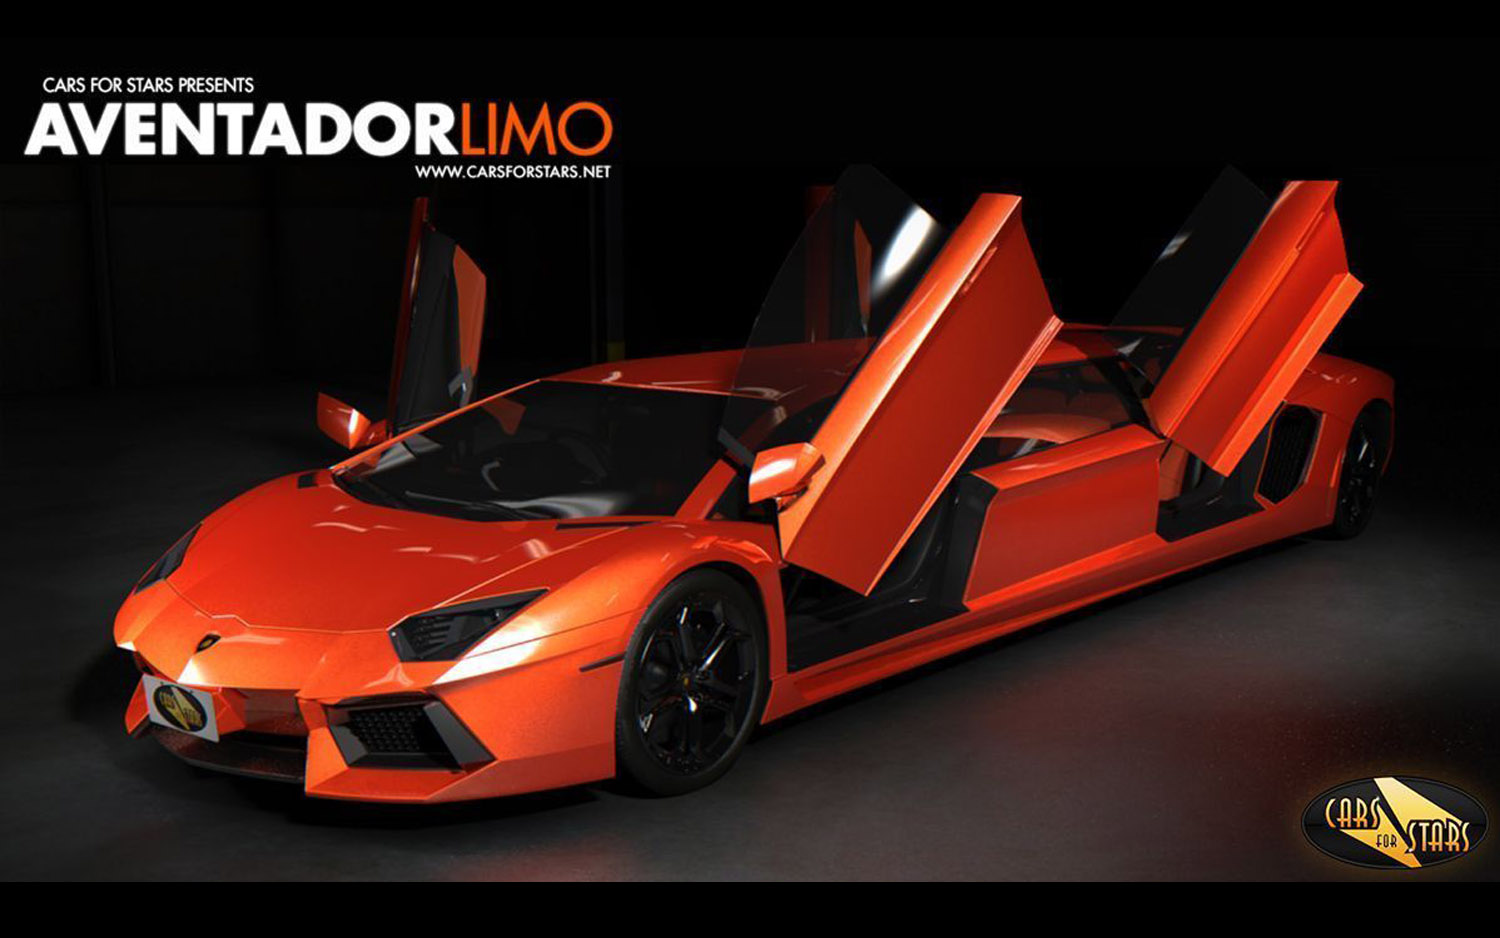 Sport Car Lambo Aventador Limo Verses Automotive Share